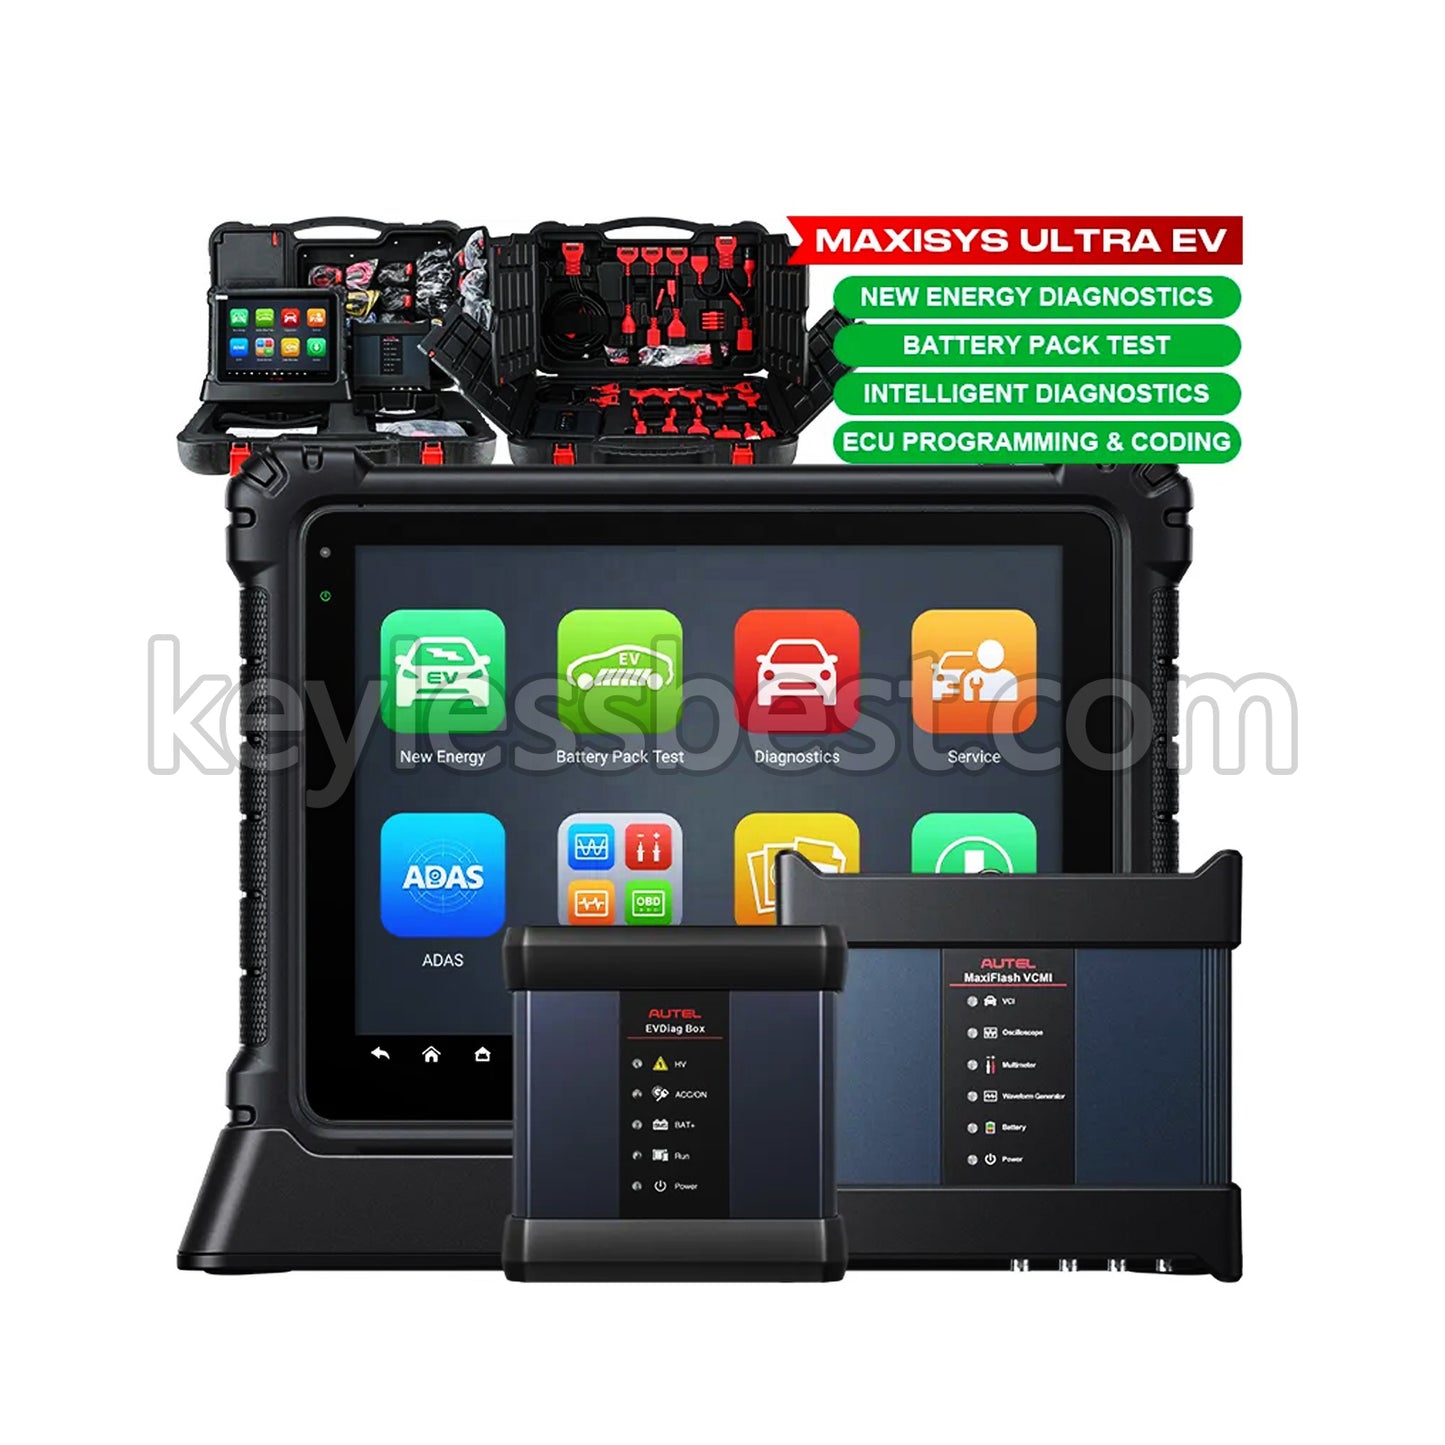 Autel MaxiSYS Ultra EV pro kit electric motor for car conversion 98v complete pick up truck smart dc battery diagnostic scanner